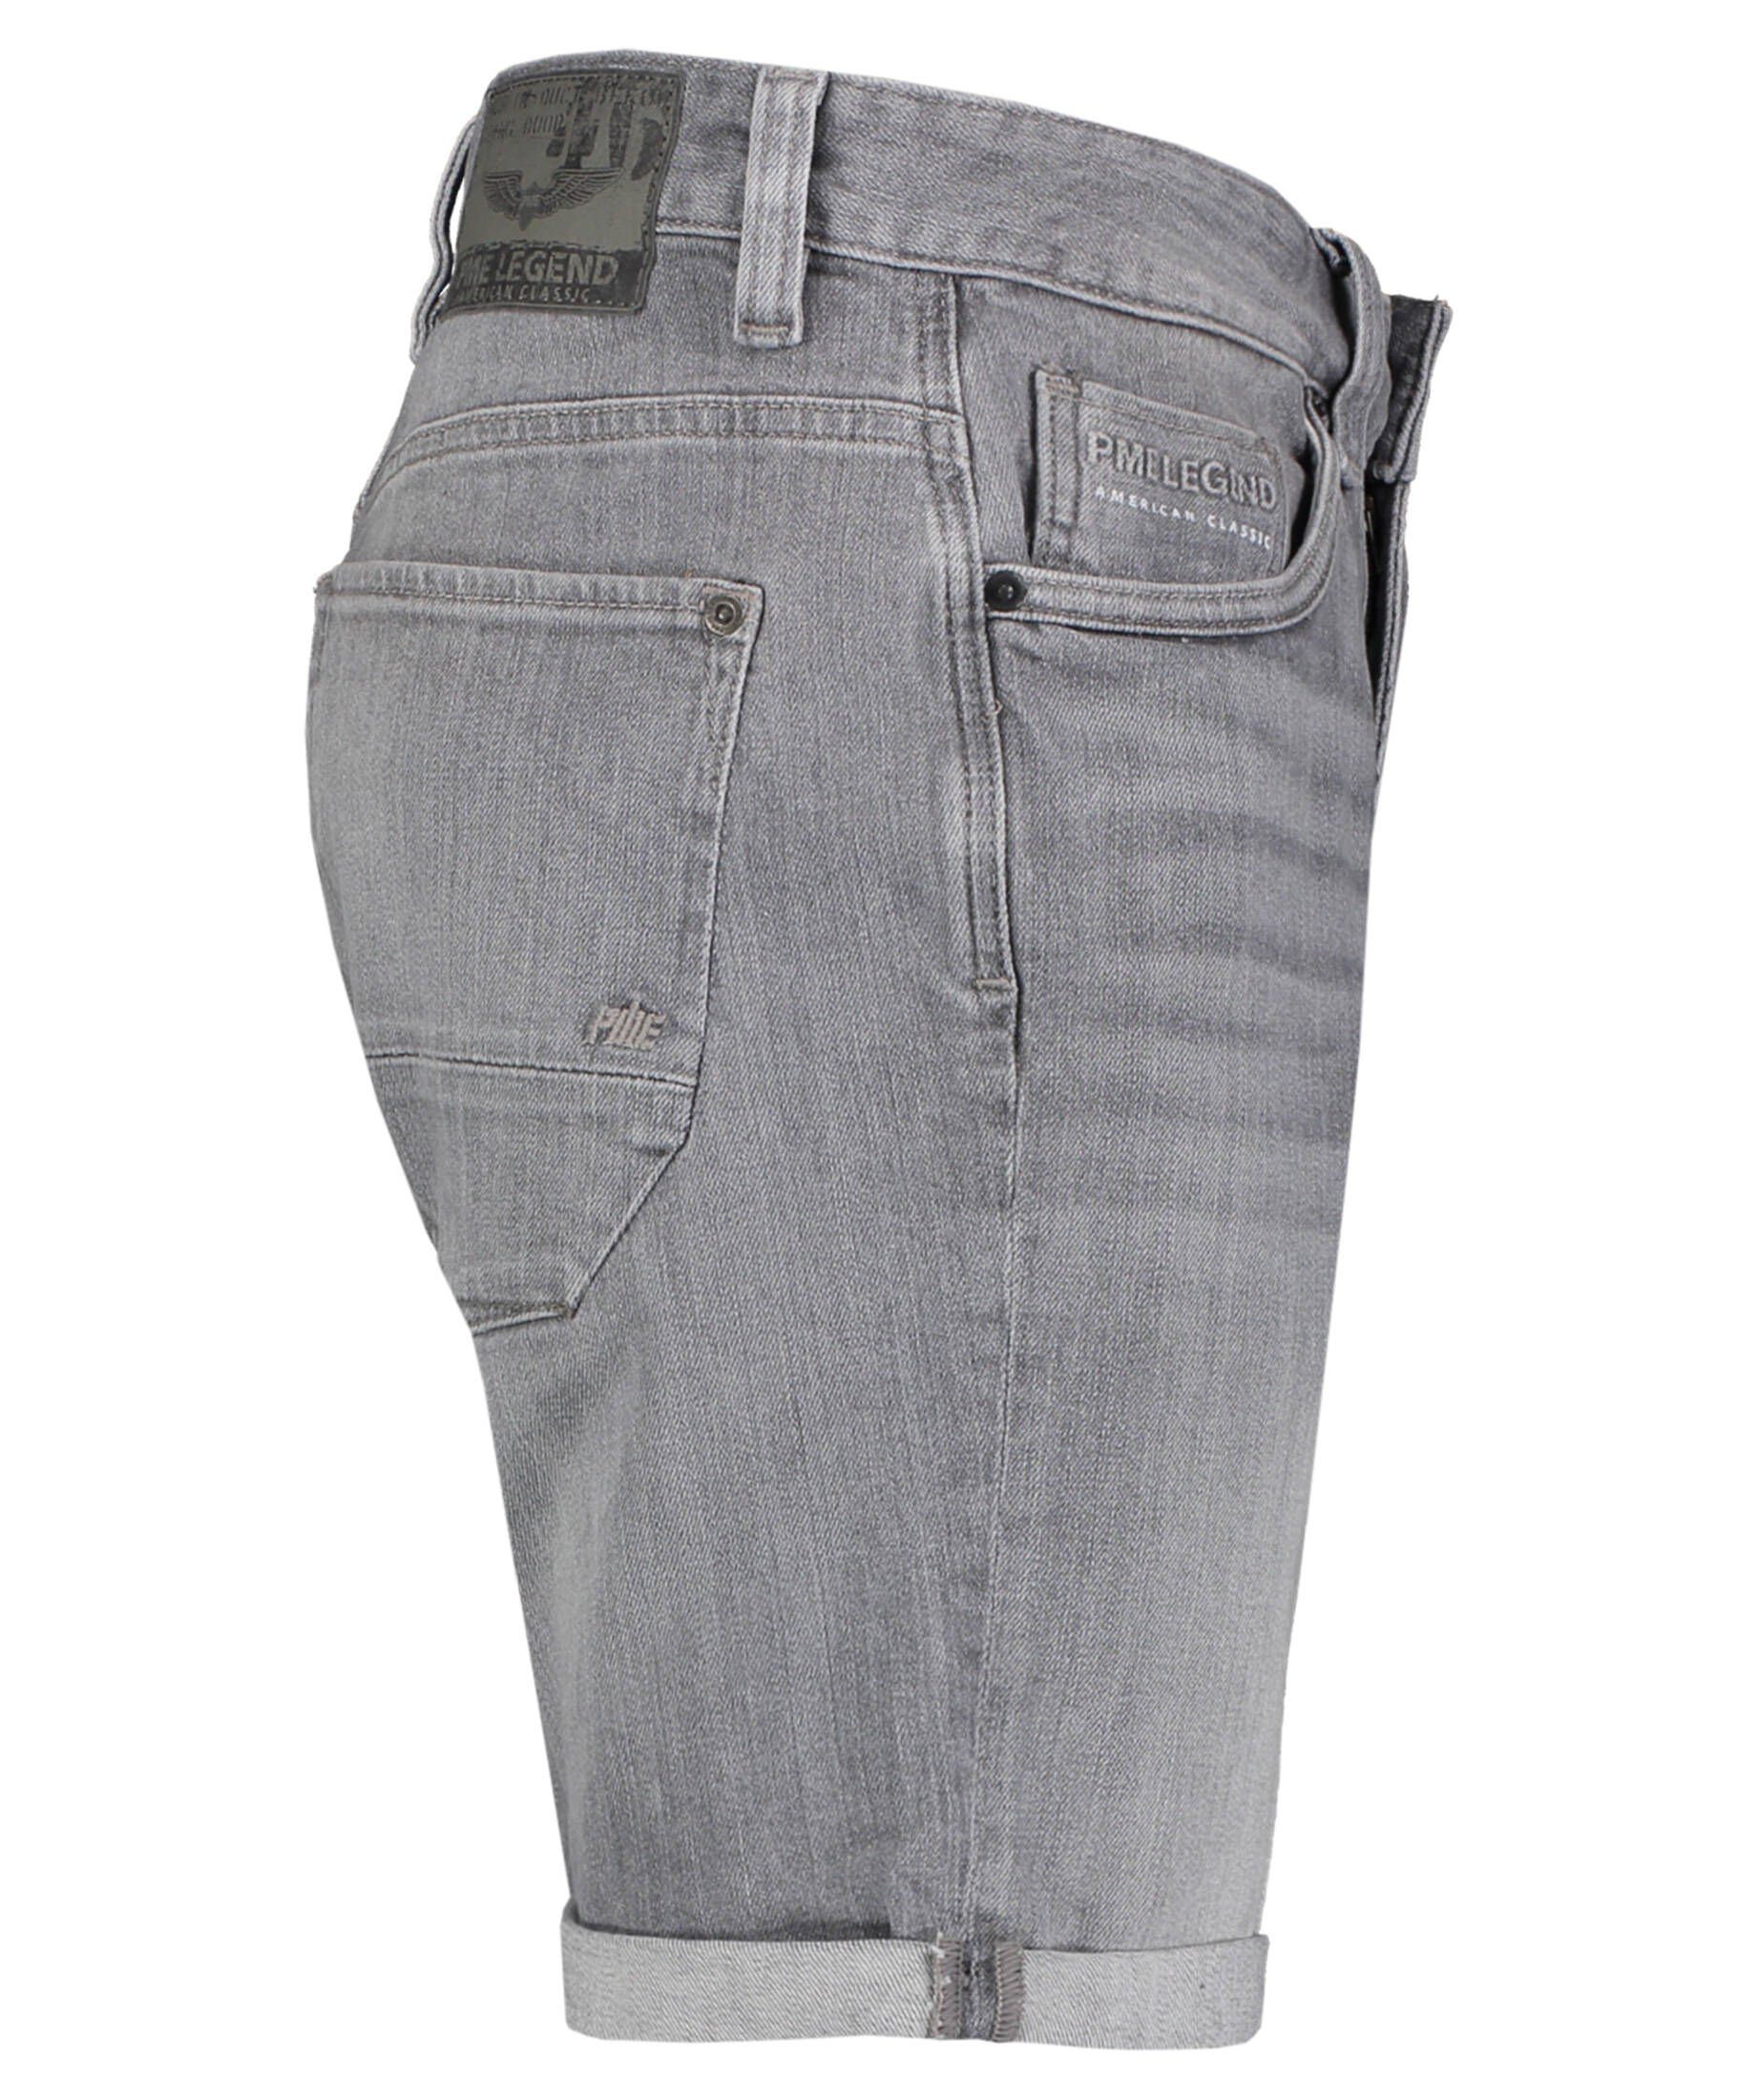 Regular Fit PME Herren LEGEND NIGHTFLIGHT (12) silber Jeansshorts Jeanshorts